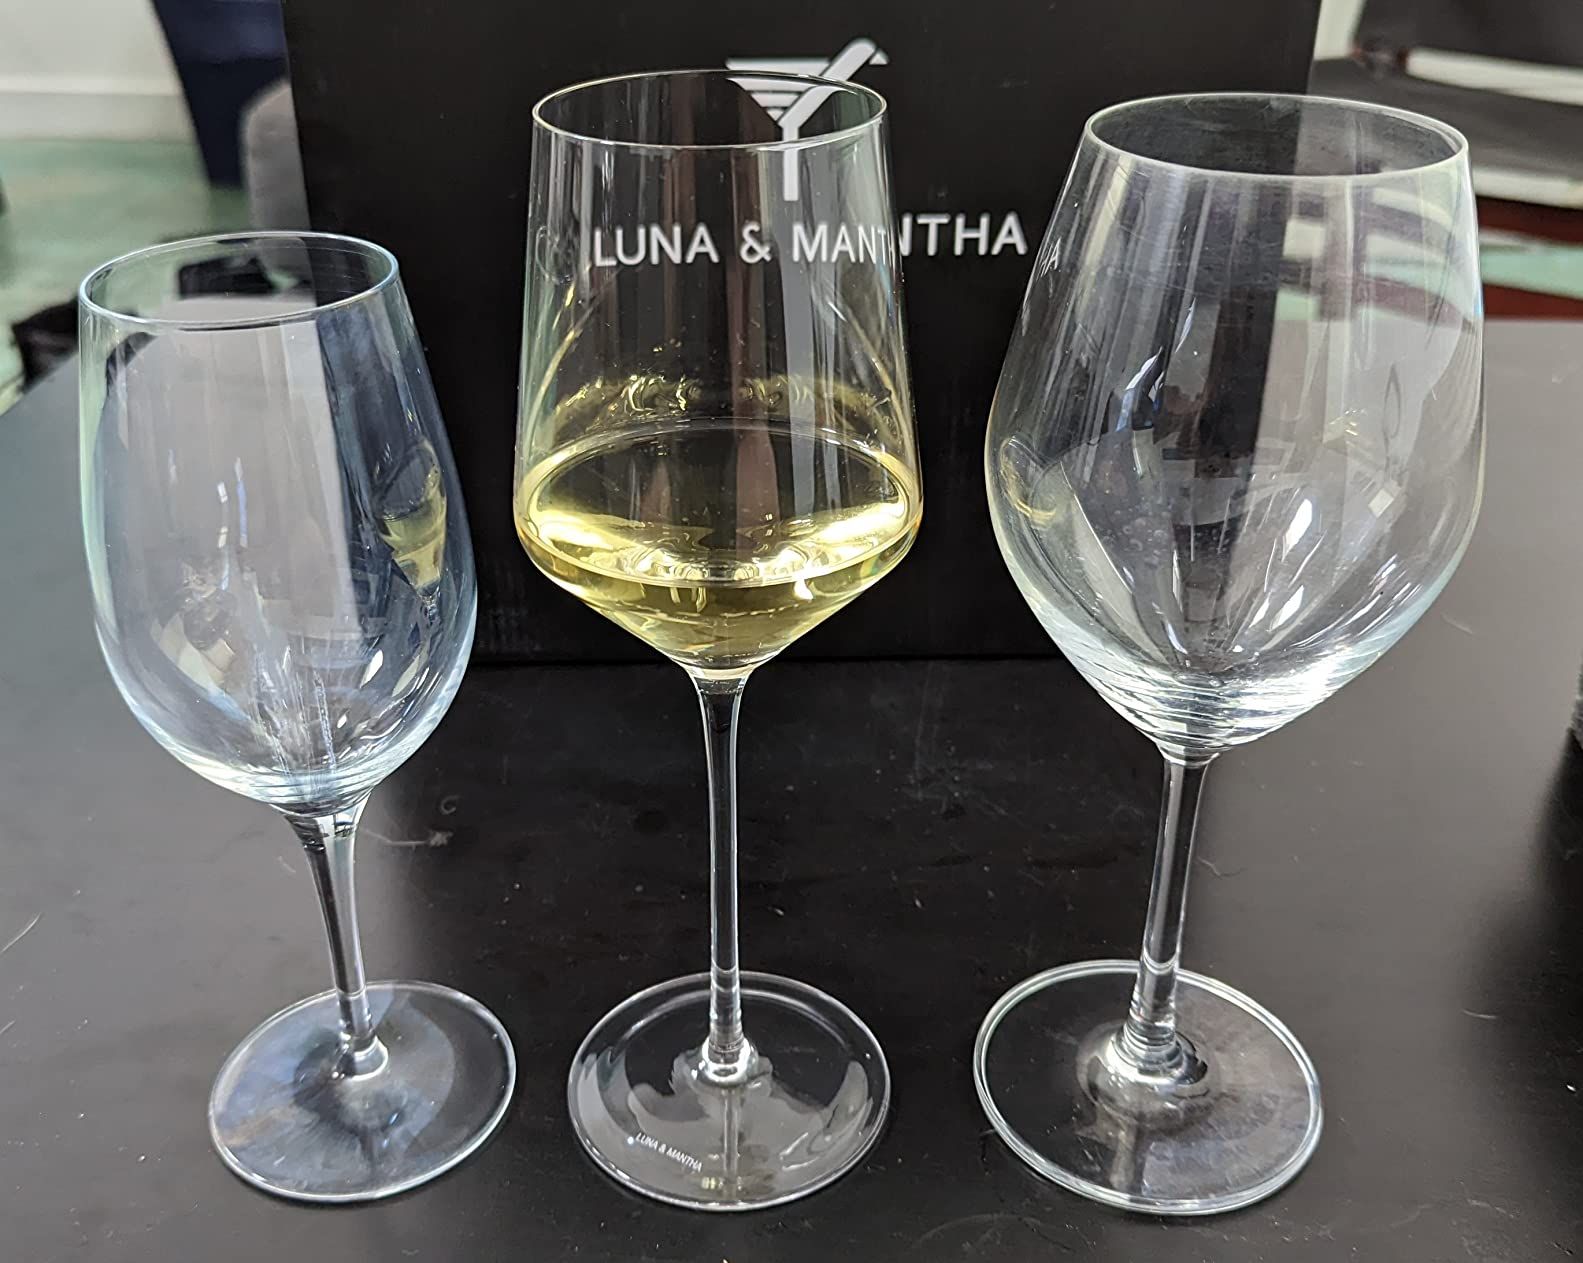 OJA Red Wine Glasses Set of 4- Premium Crystal Wine Glasses Hand Blown-15 oz,Thin Rim,Long Stem,P... | Amazon (US)